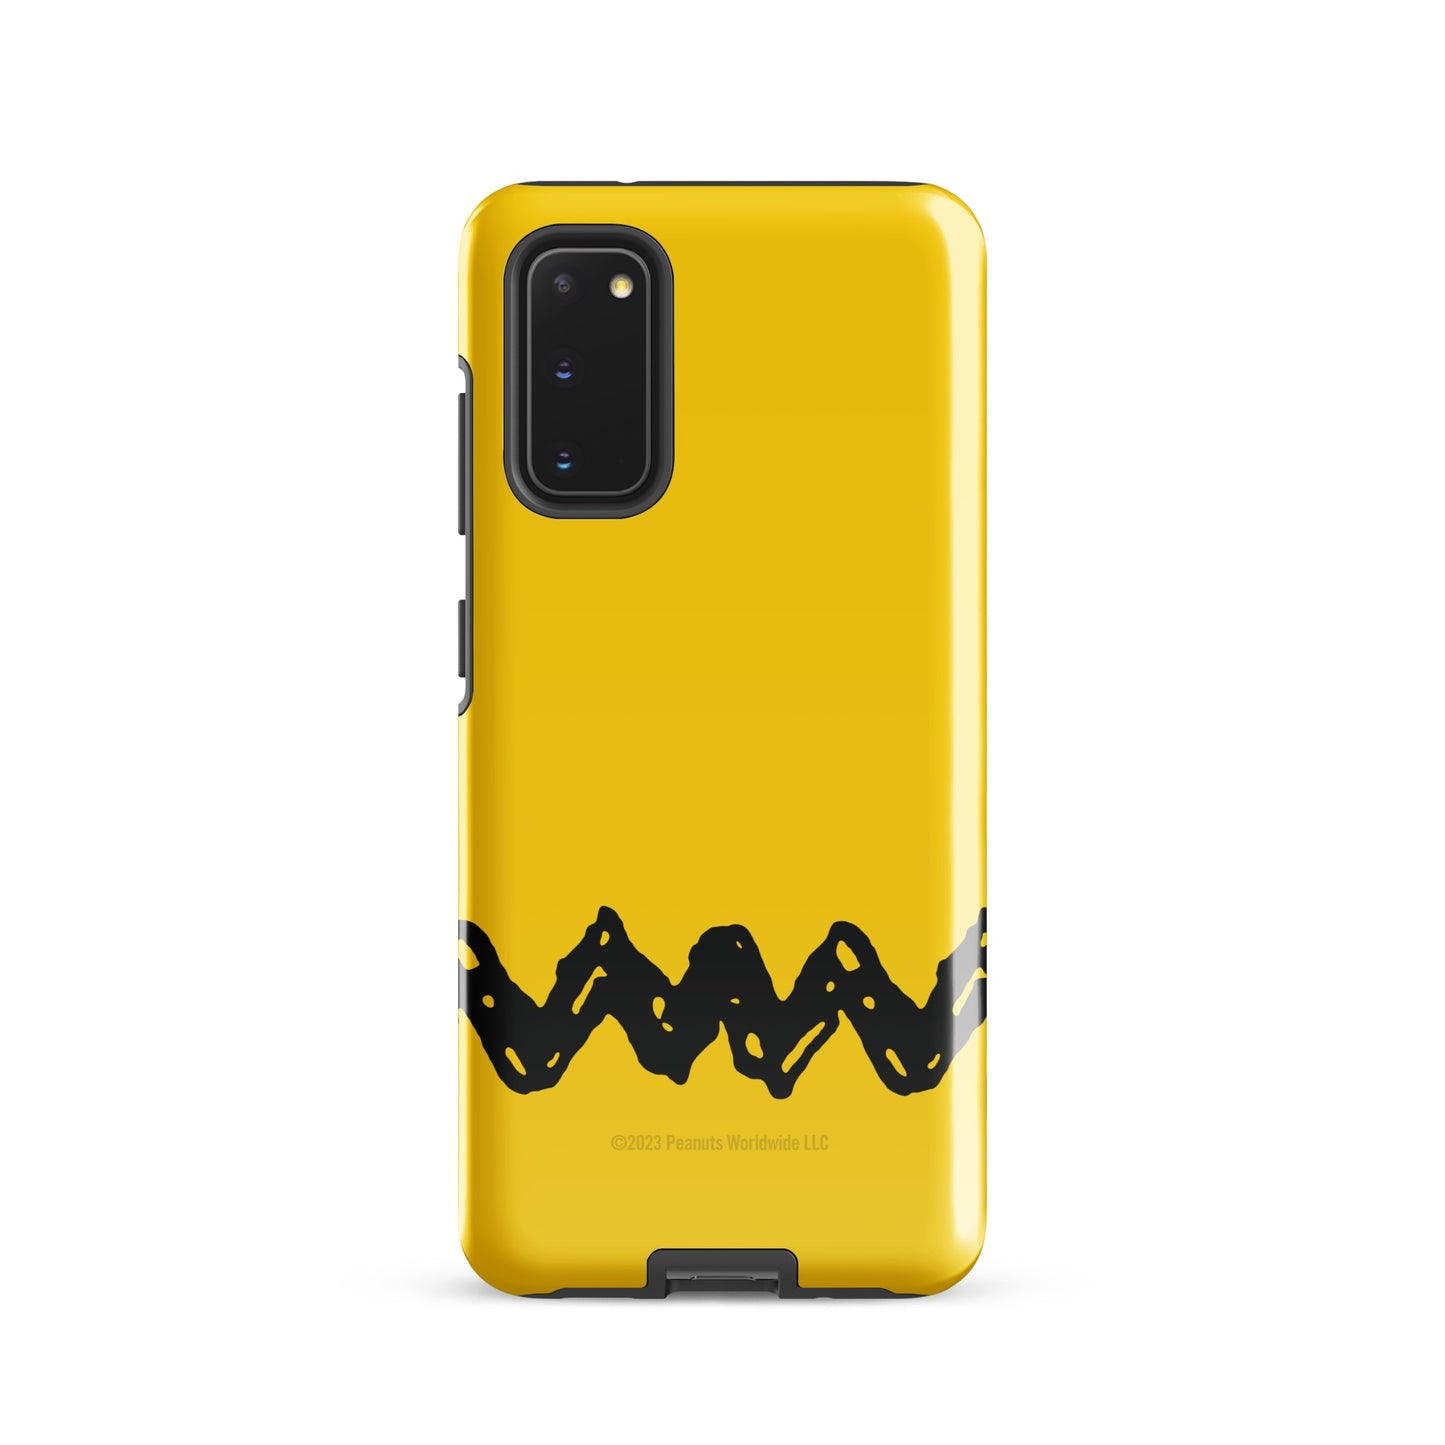 Peanuts Charlie Brown Tough Phone Case - Samsung